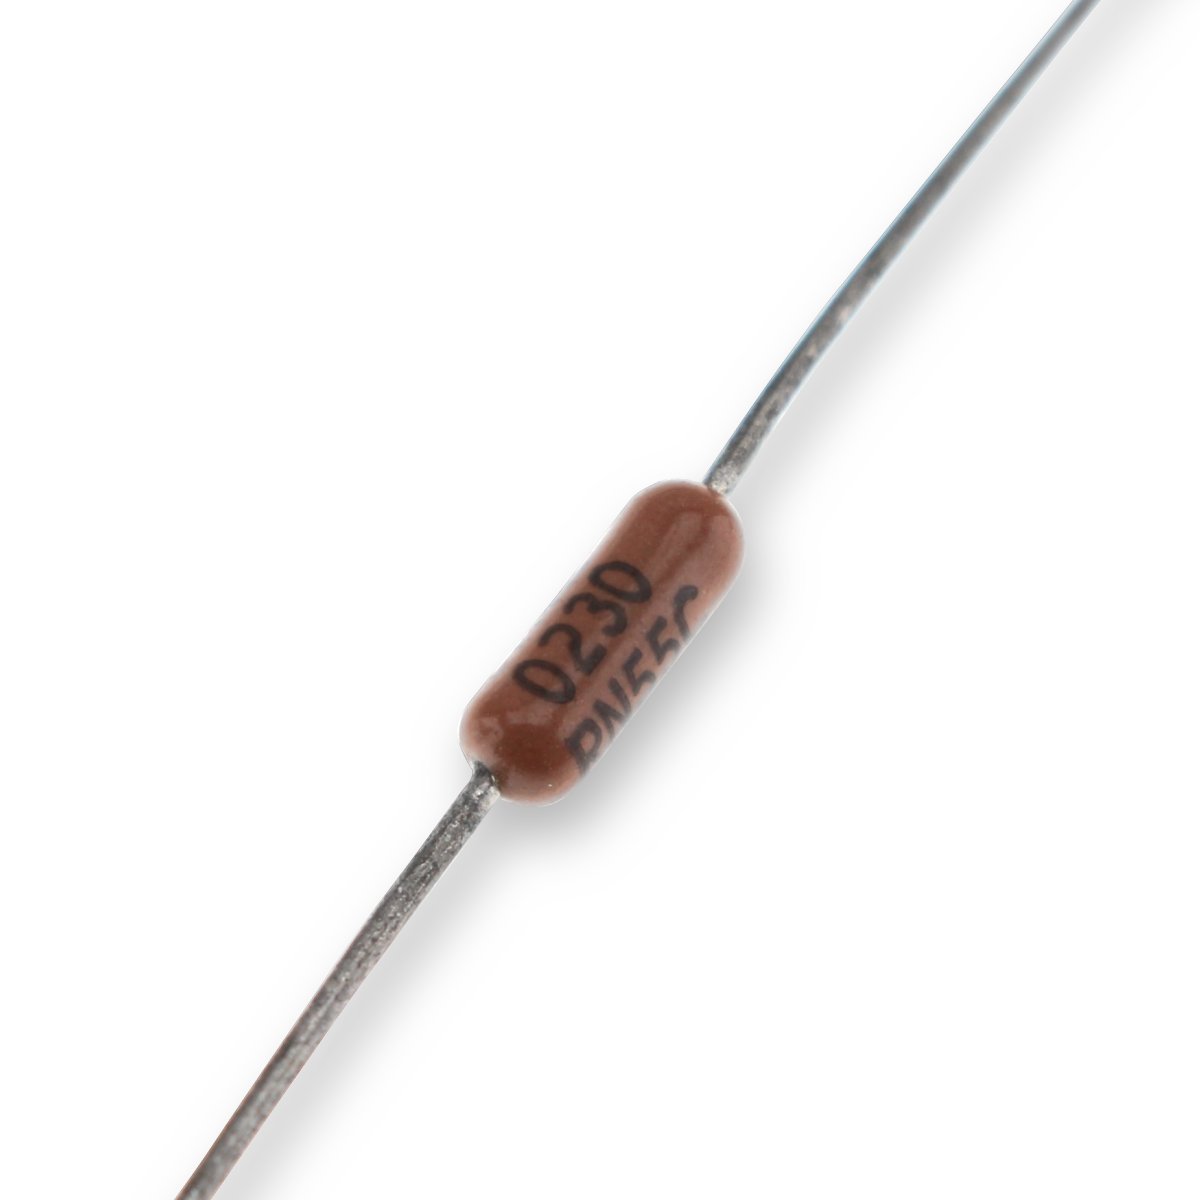 VISHAY DALE CMF55 Resistor 1% 50ppm 249 KOhm